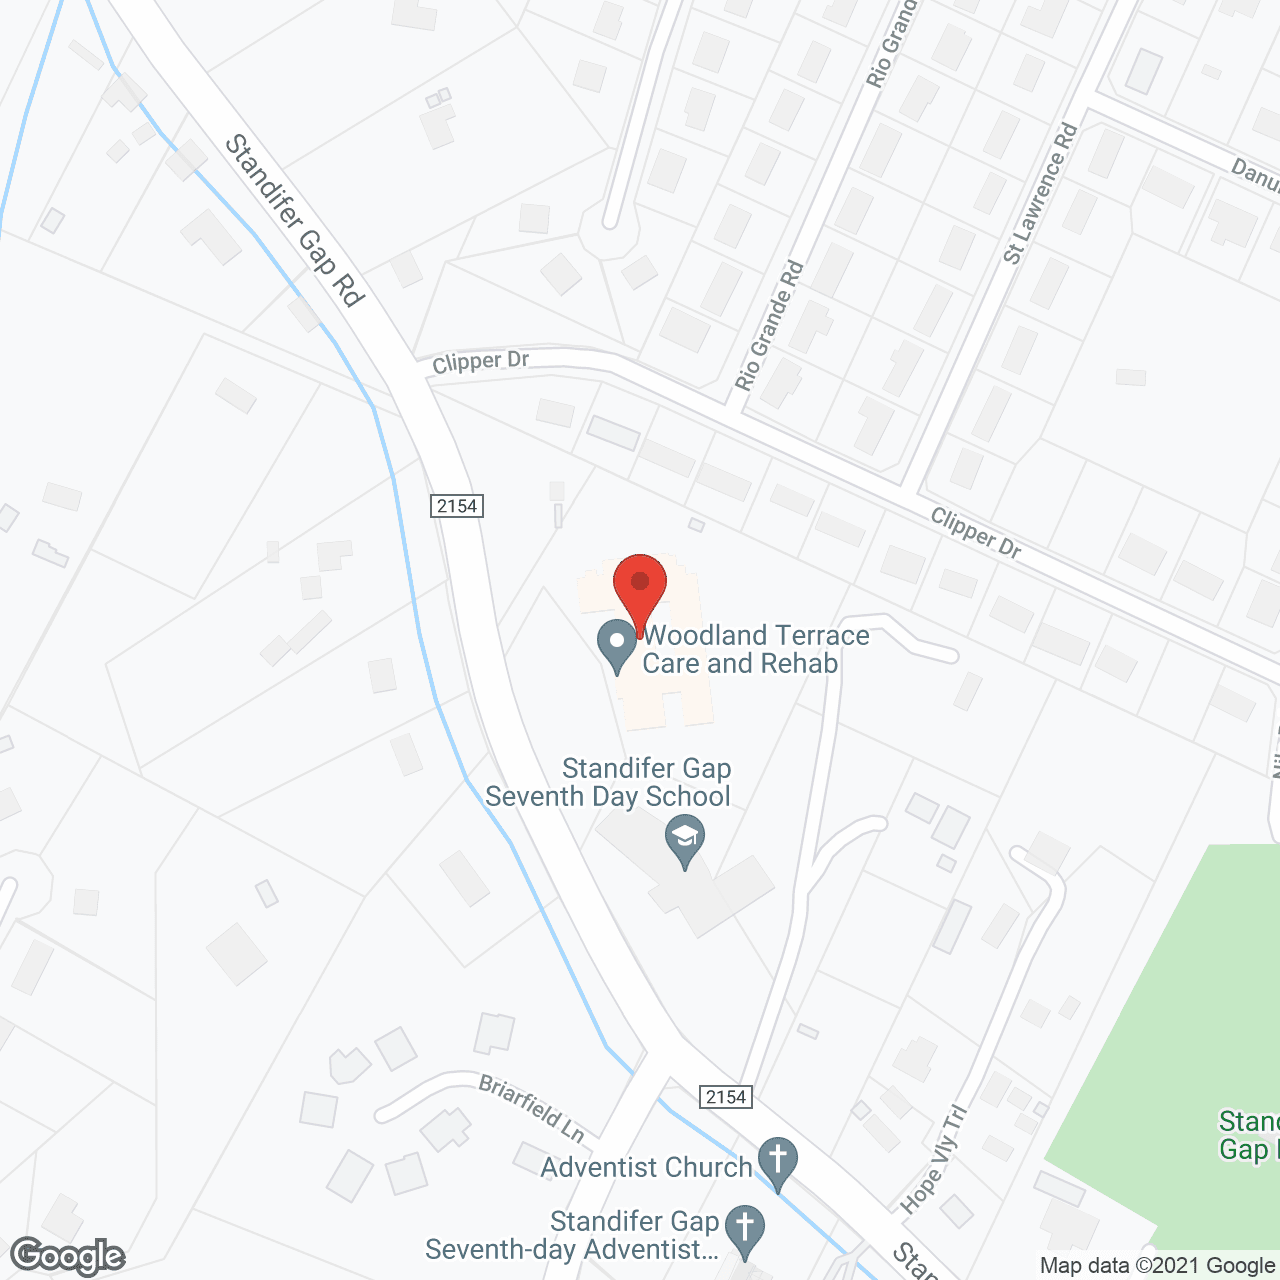 Consulate in google map